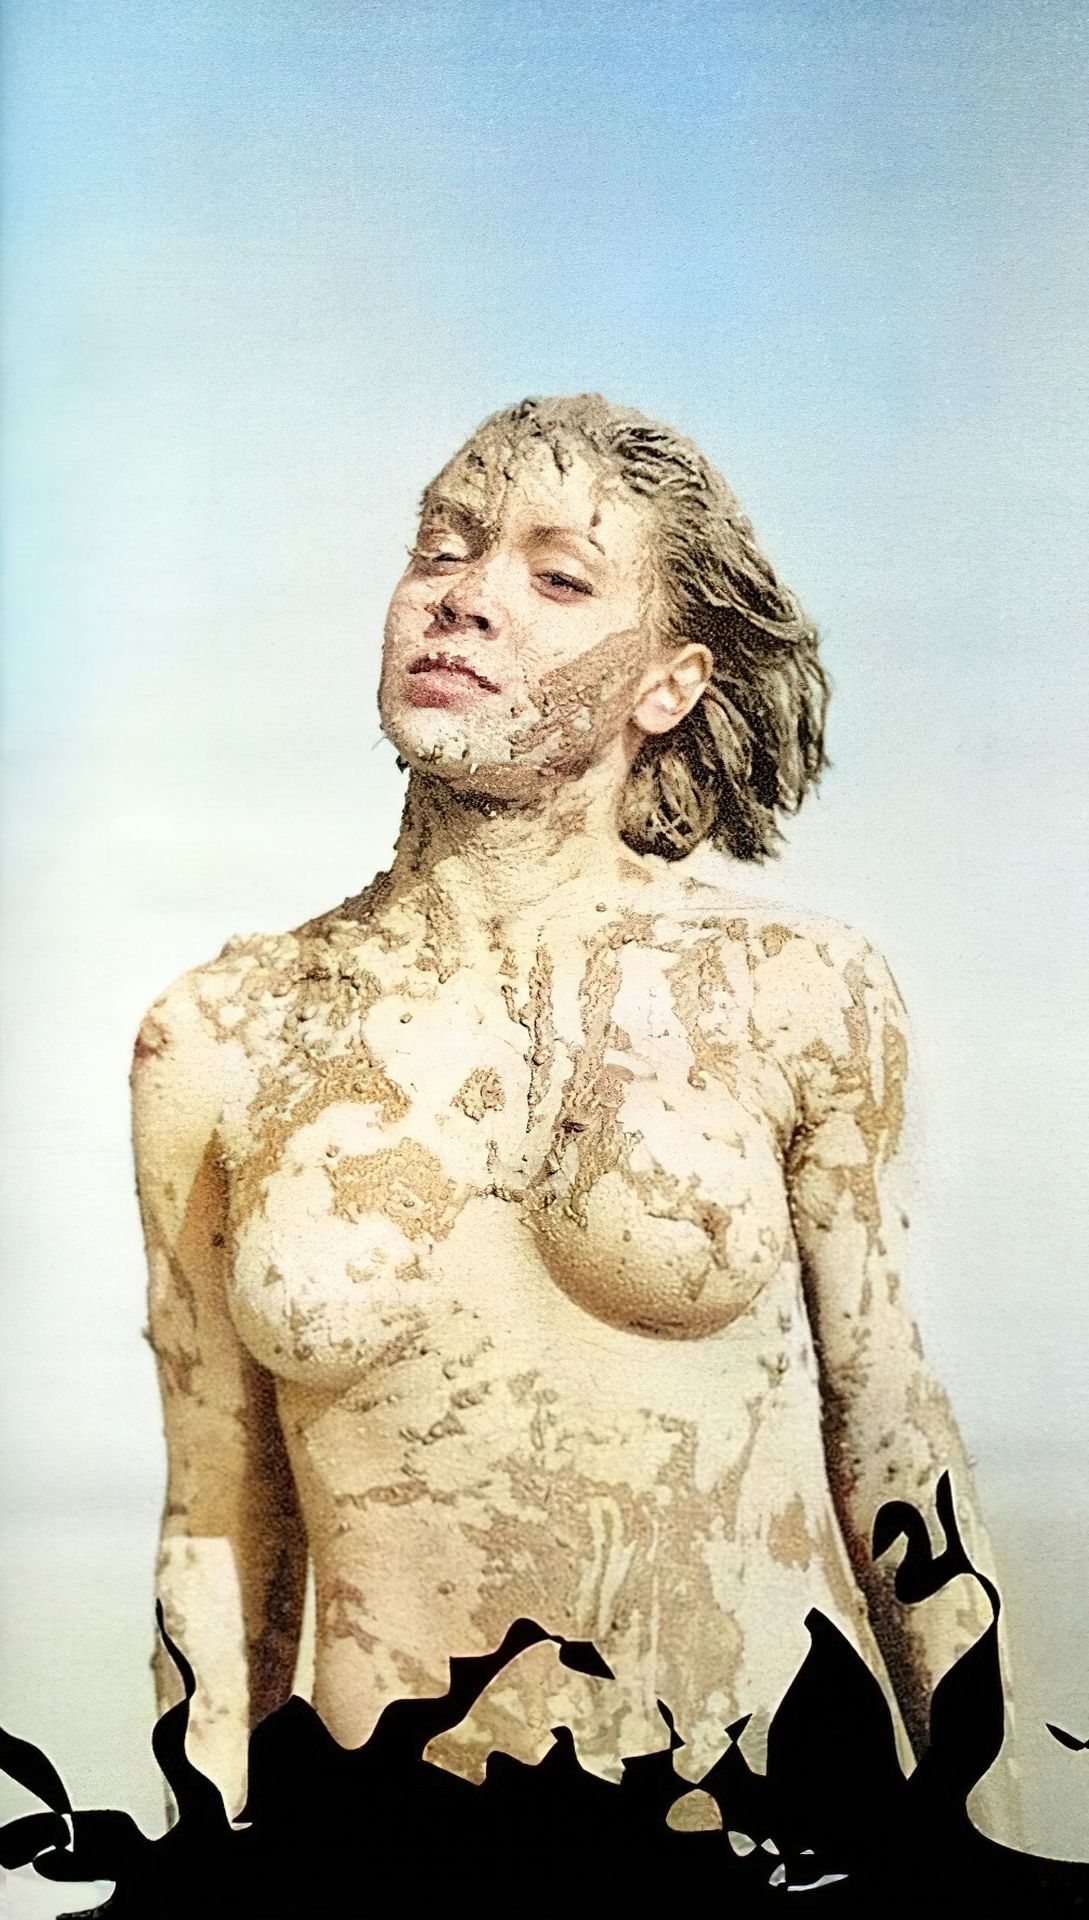 Alyssa Milano Nude at 20-Years-Old (20 Colorized & Enhanced Photos)